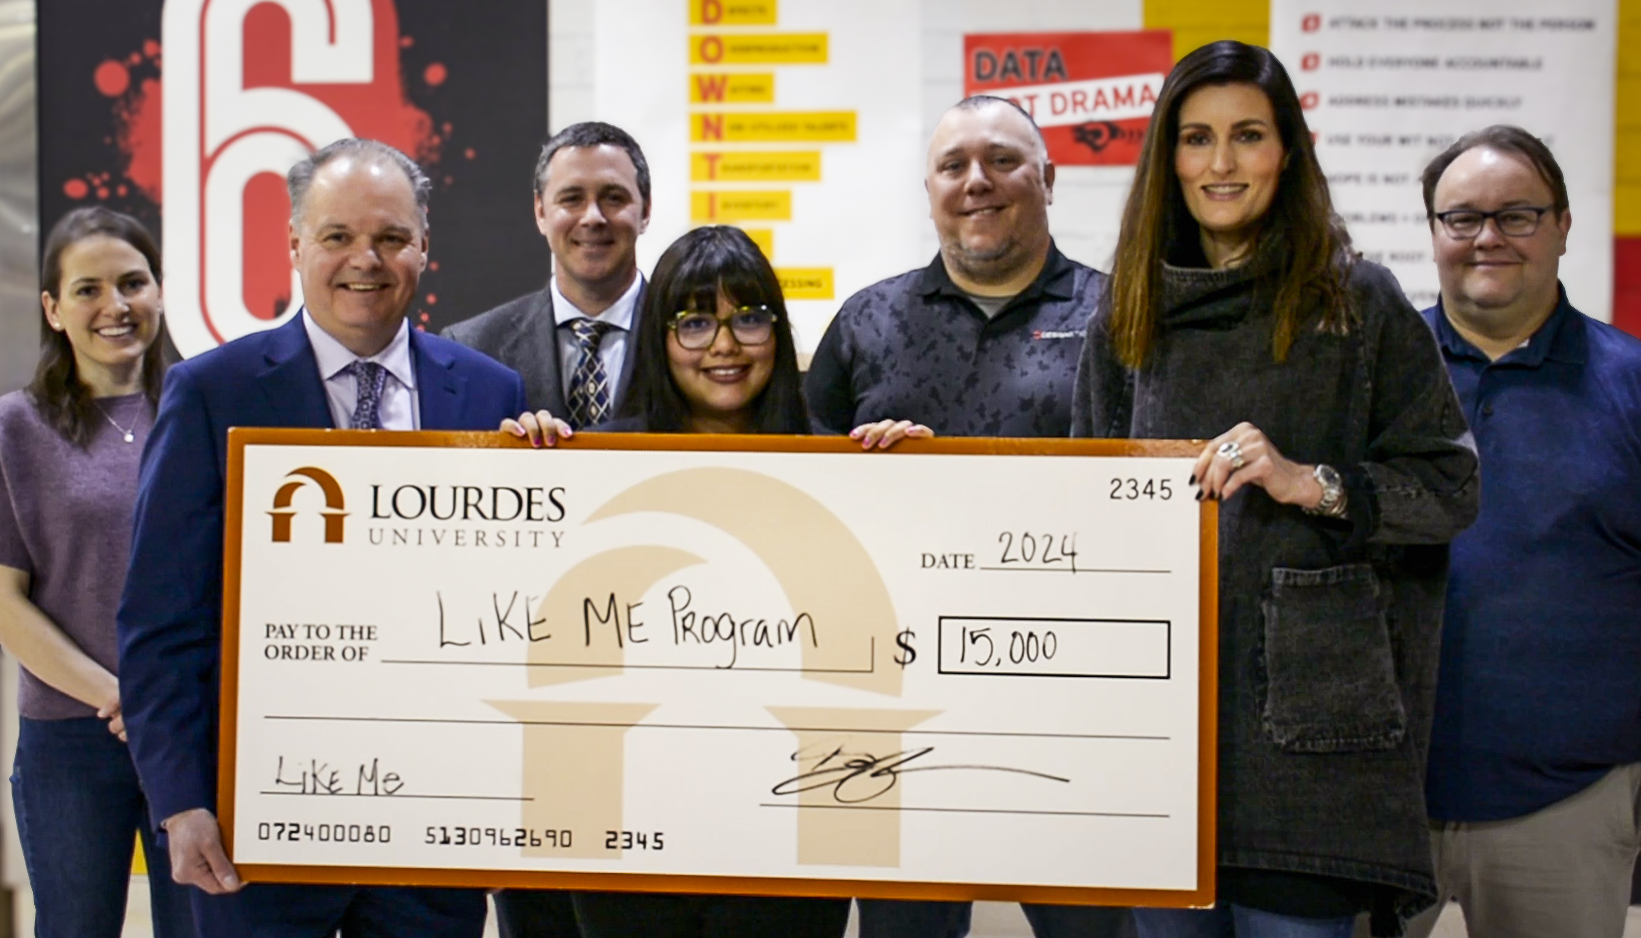 Designetics Donates $15,000 to Lourdes University’s Like Me Program